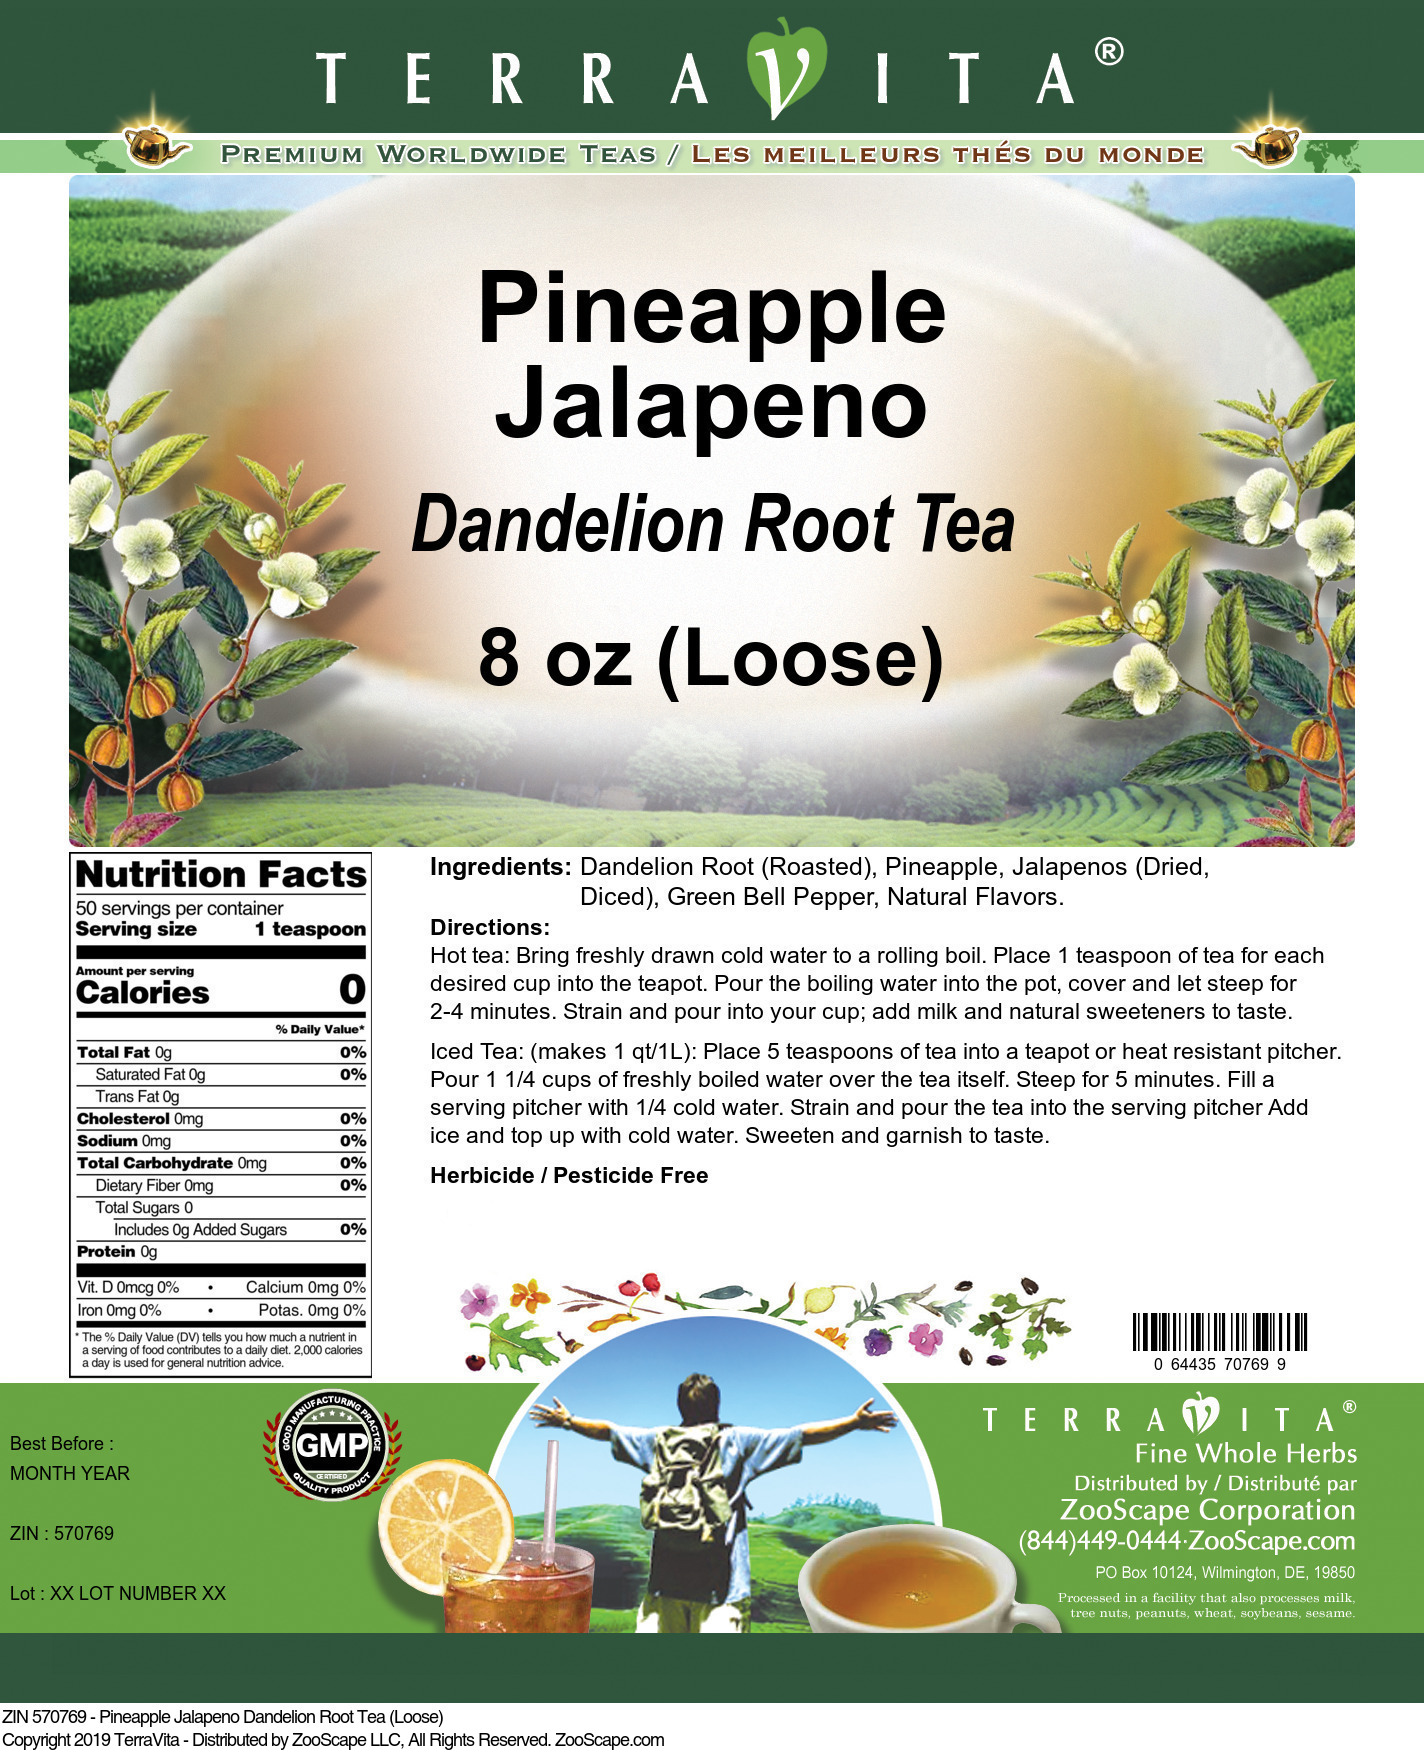 Pineapple Jalapeno Dandelion Root Tea (Loose) - Label